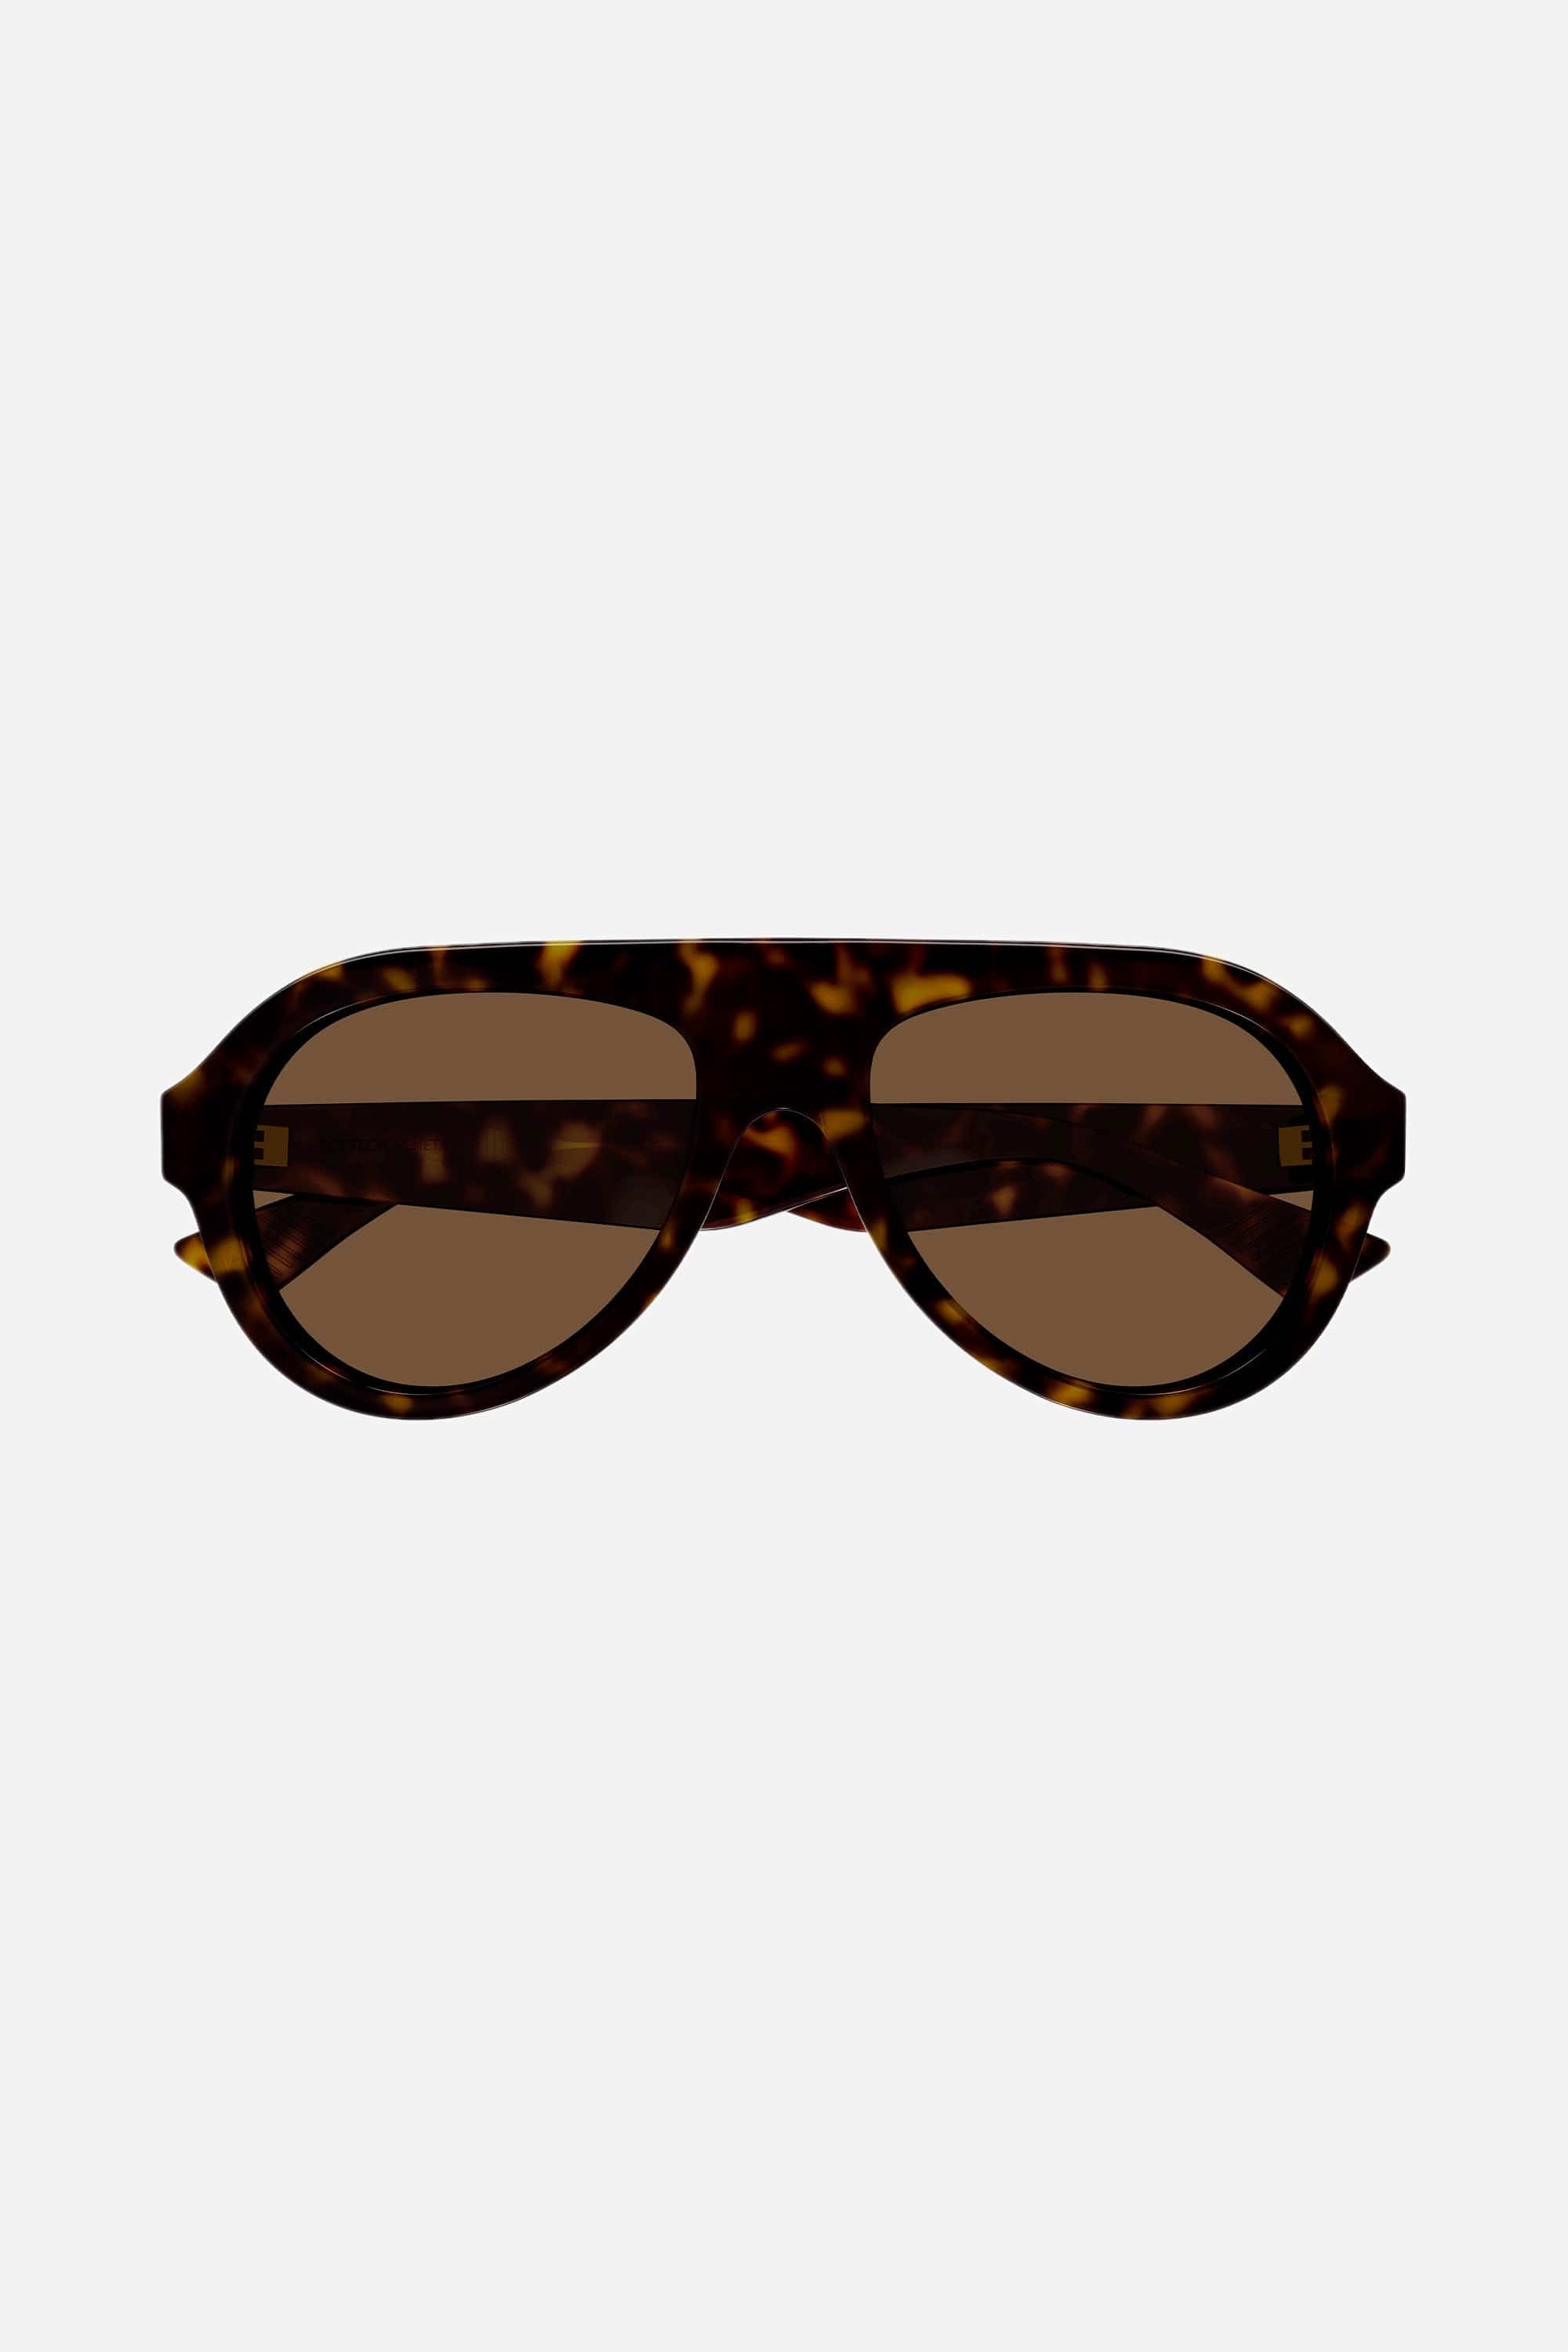 Bottega Veneta pilot brown sunglasses - Eyewear Club